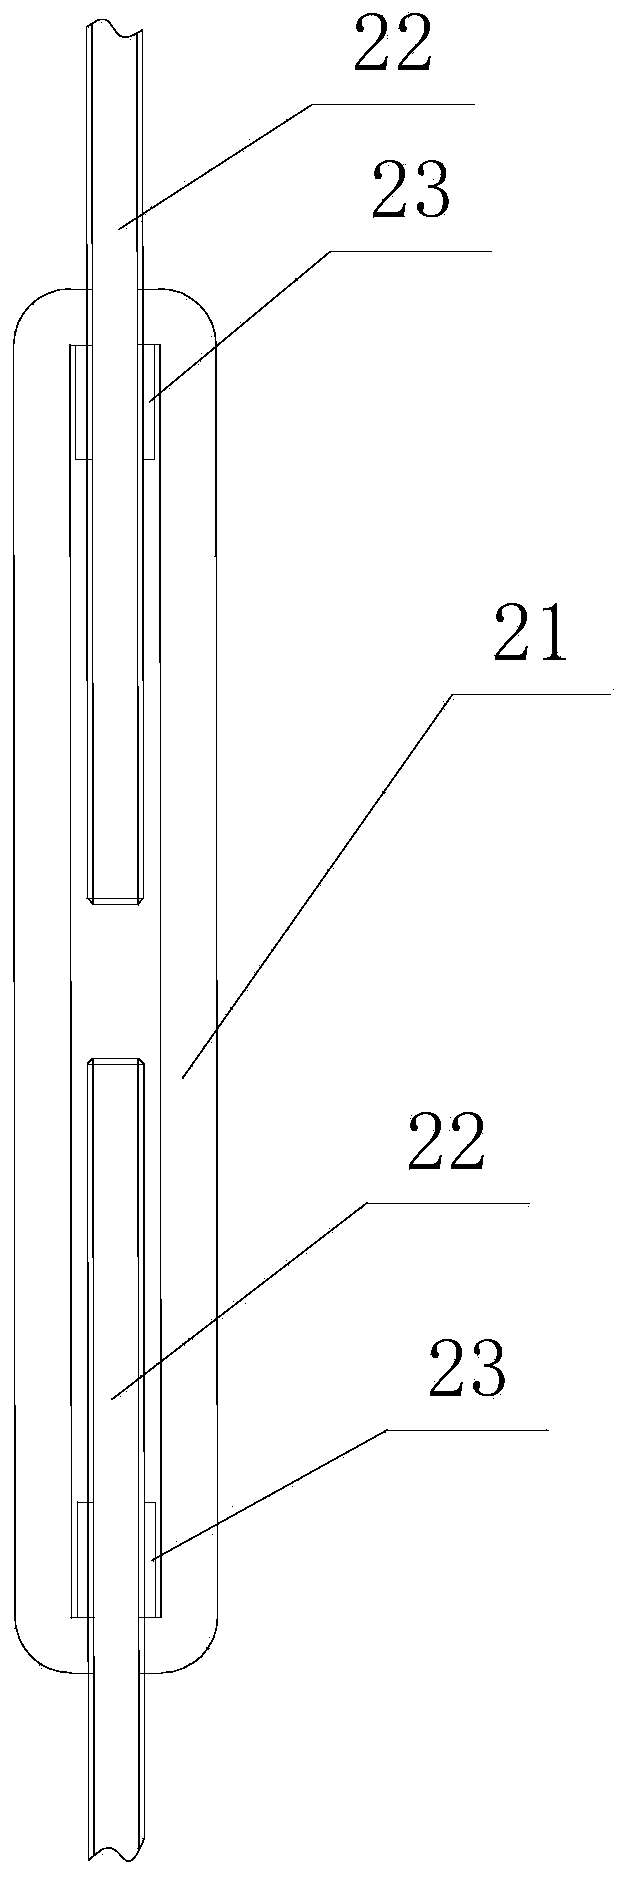 Special hoisting mechanism for nuclear main pump flywheel